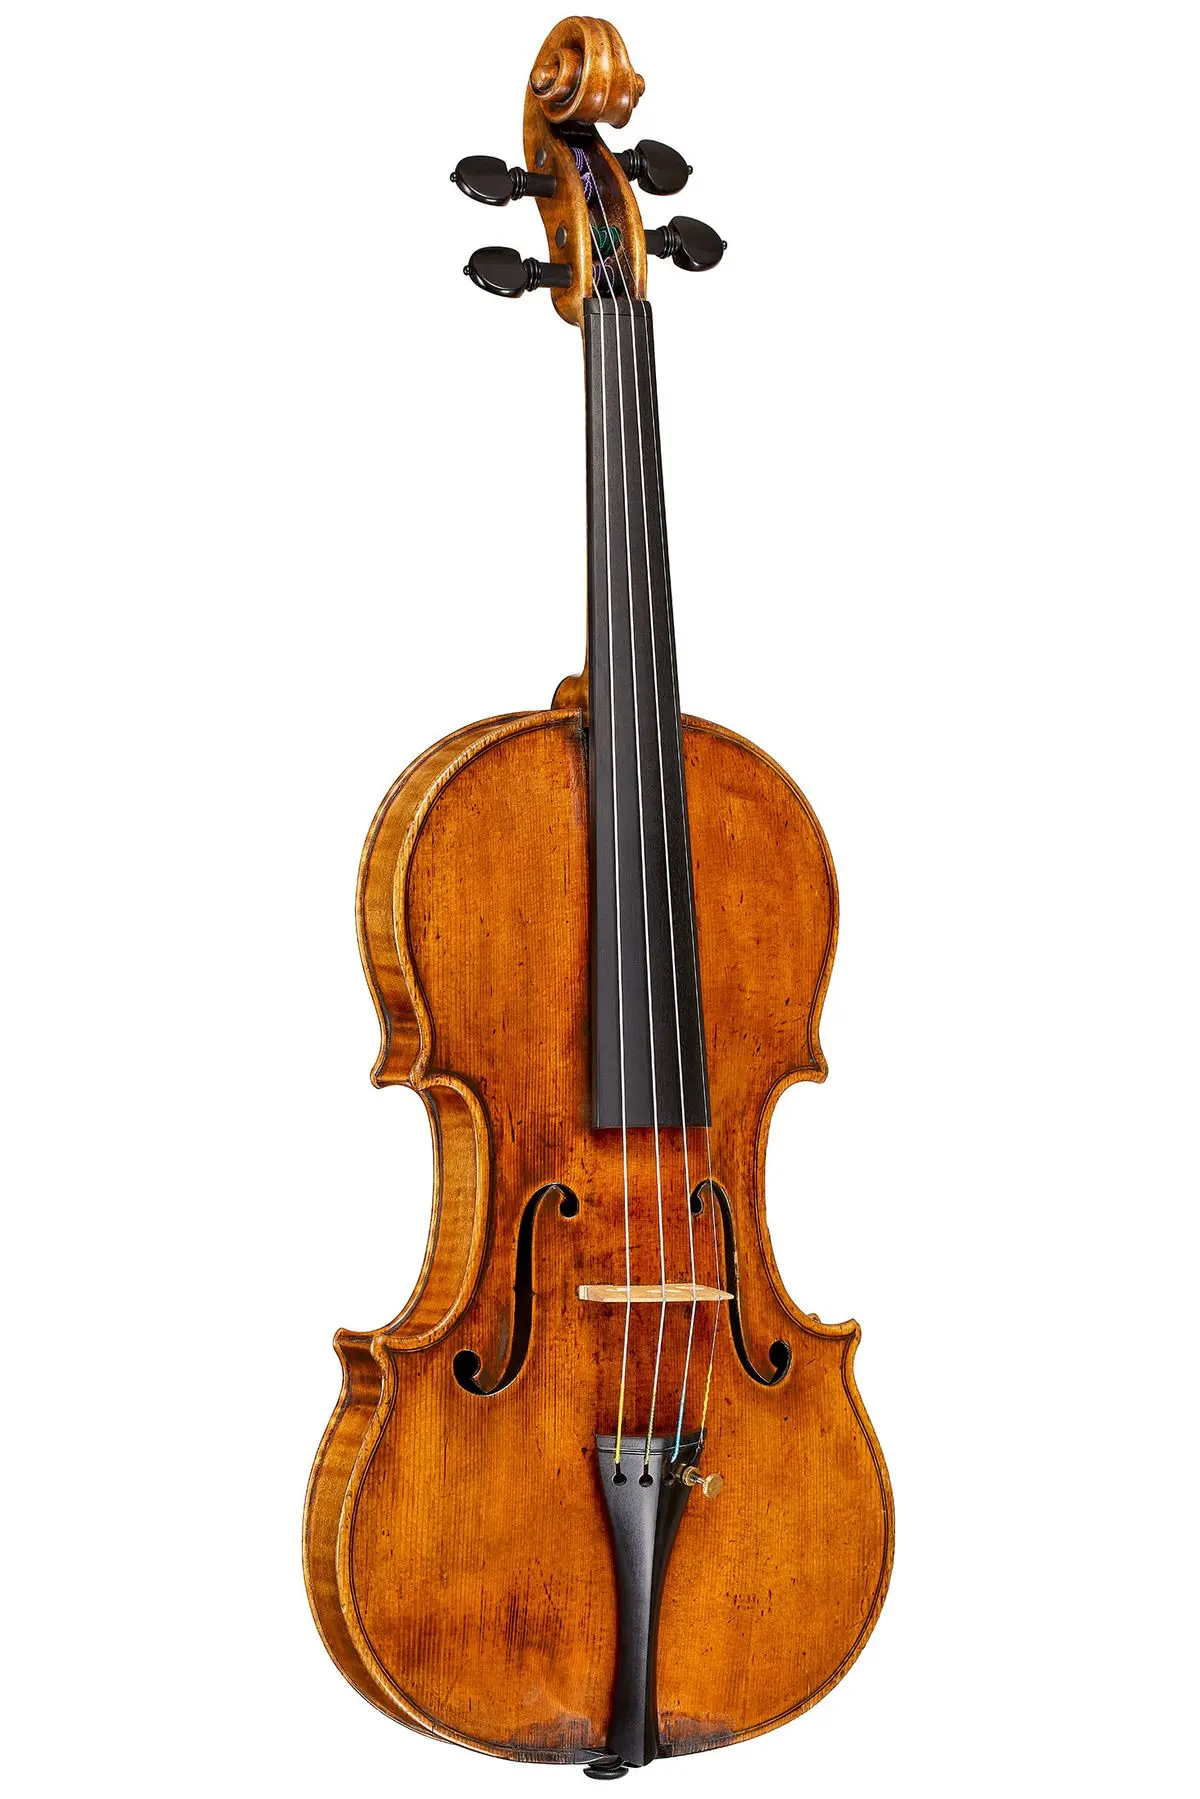 antonio stradivari violin cost - How much is a 1703 Stradivarius violin worth